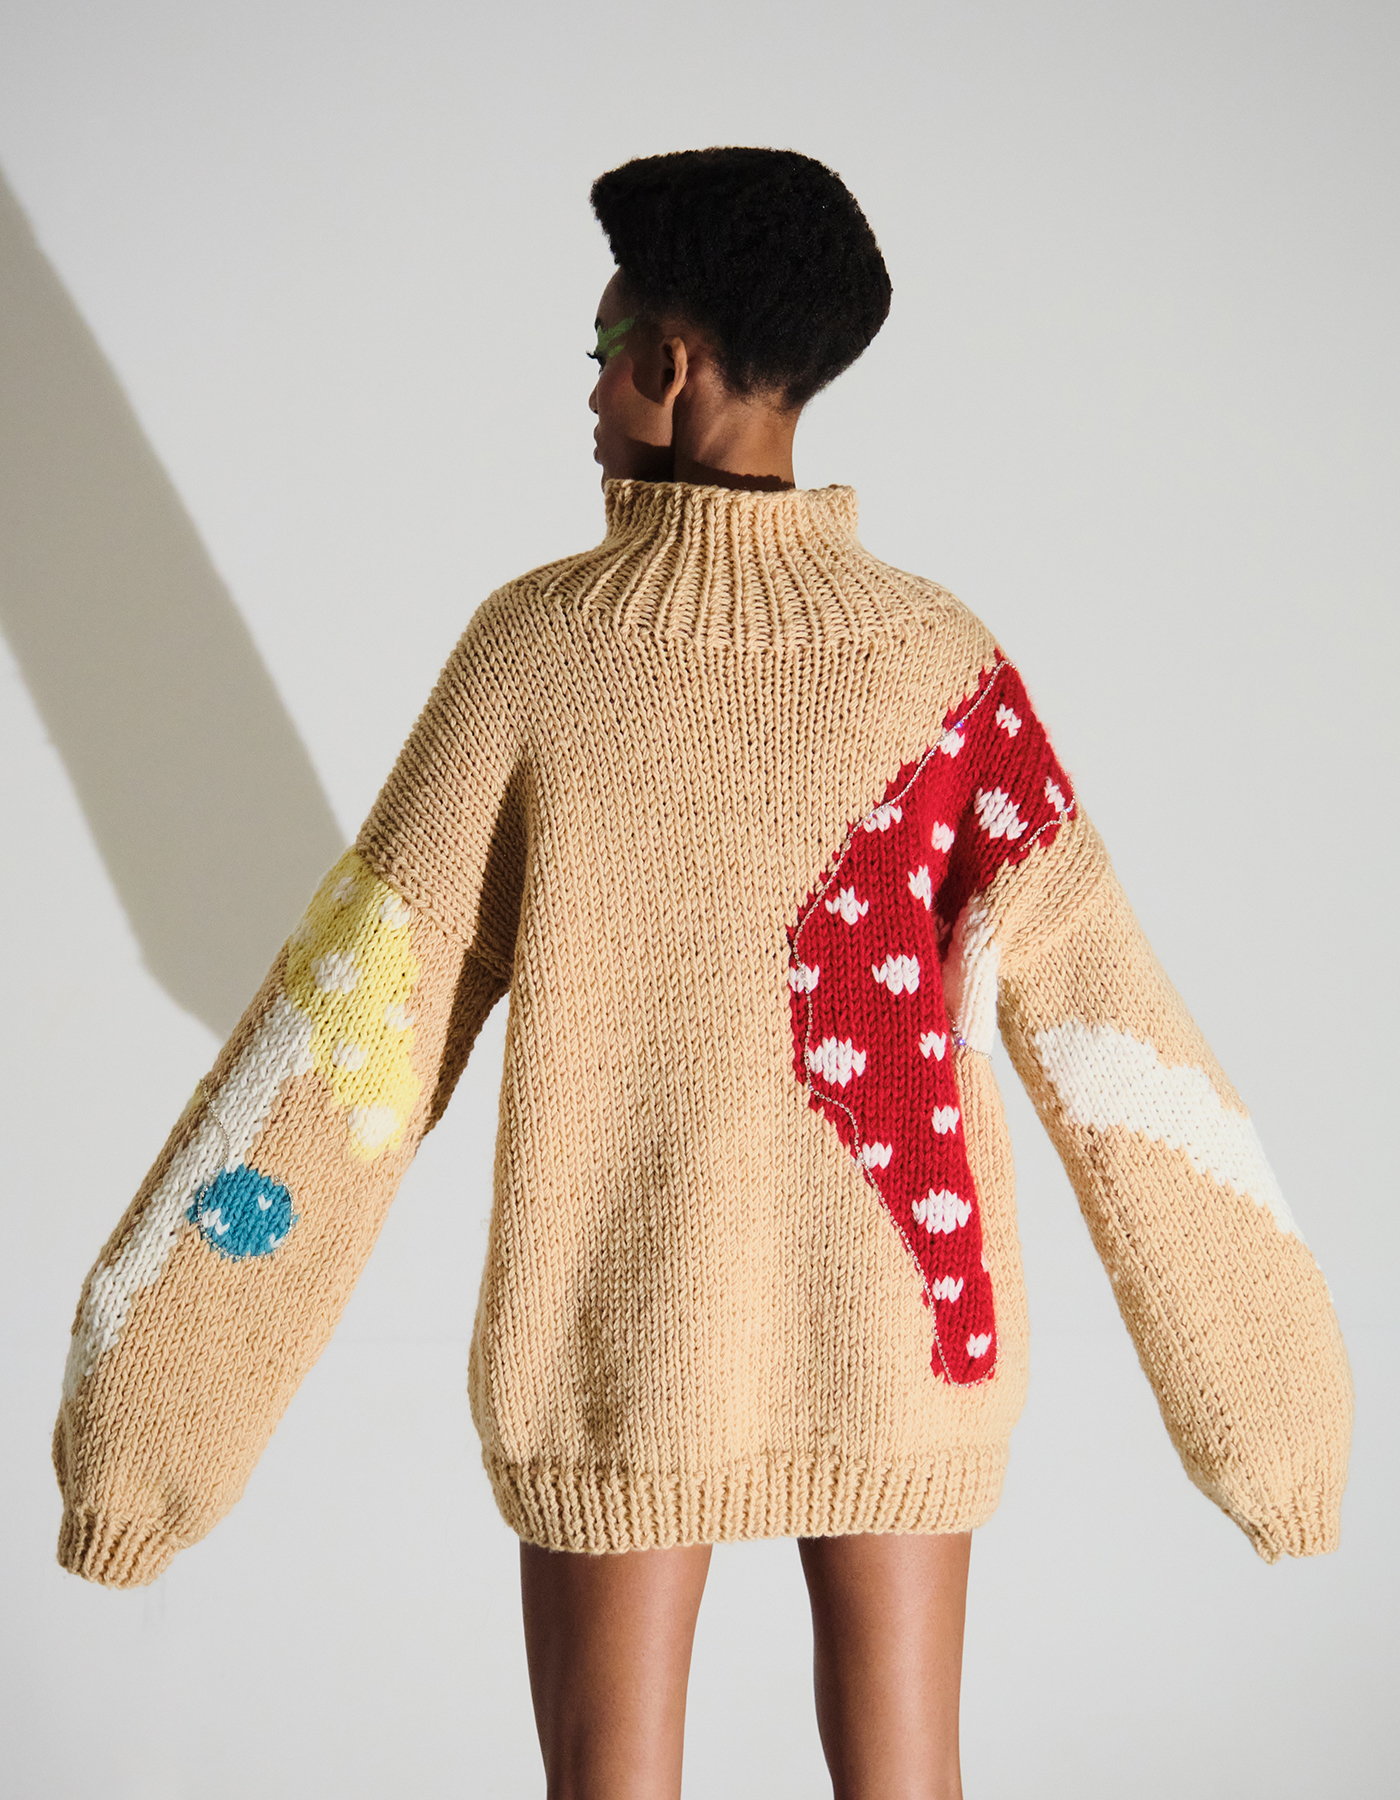 Knitted mushroom sweater